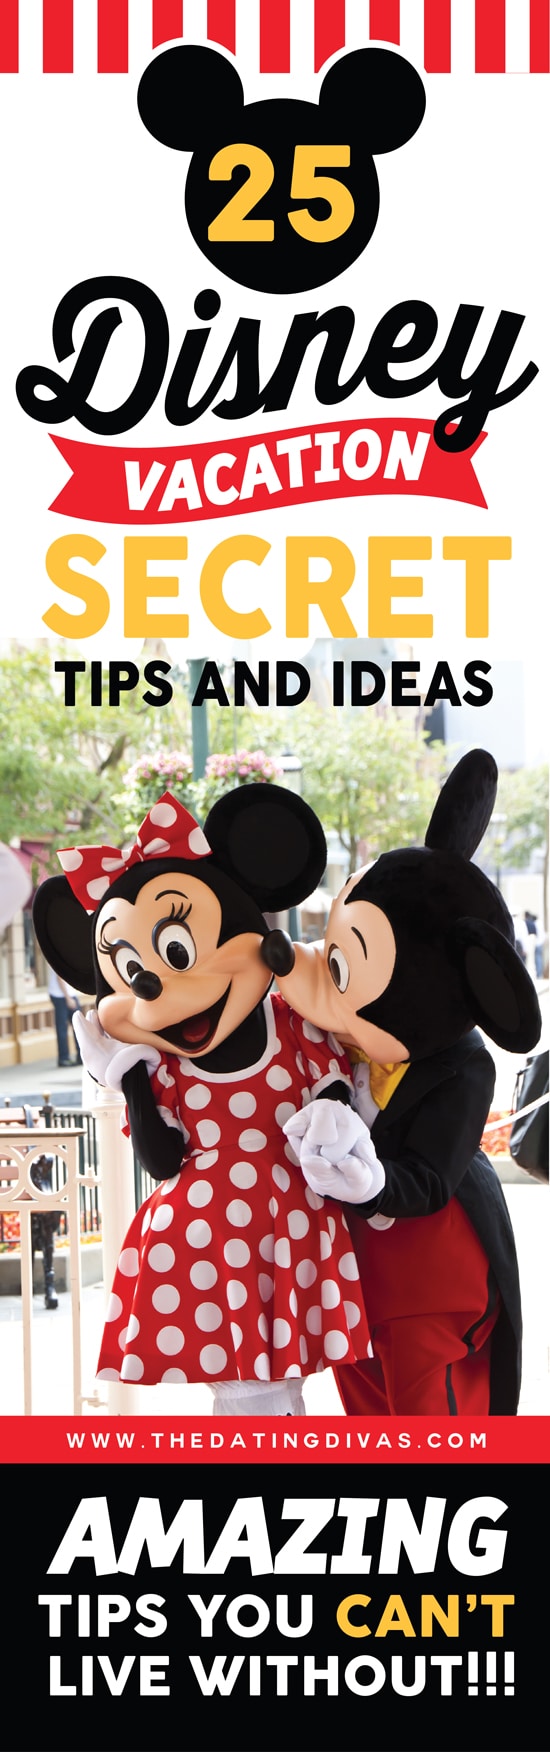 25 Disney Vacation Secret Tips and Ideas